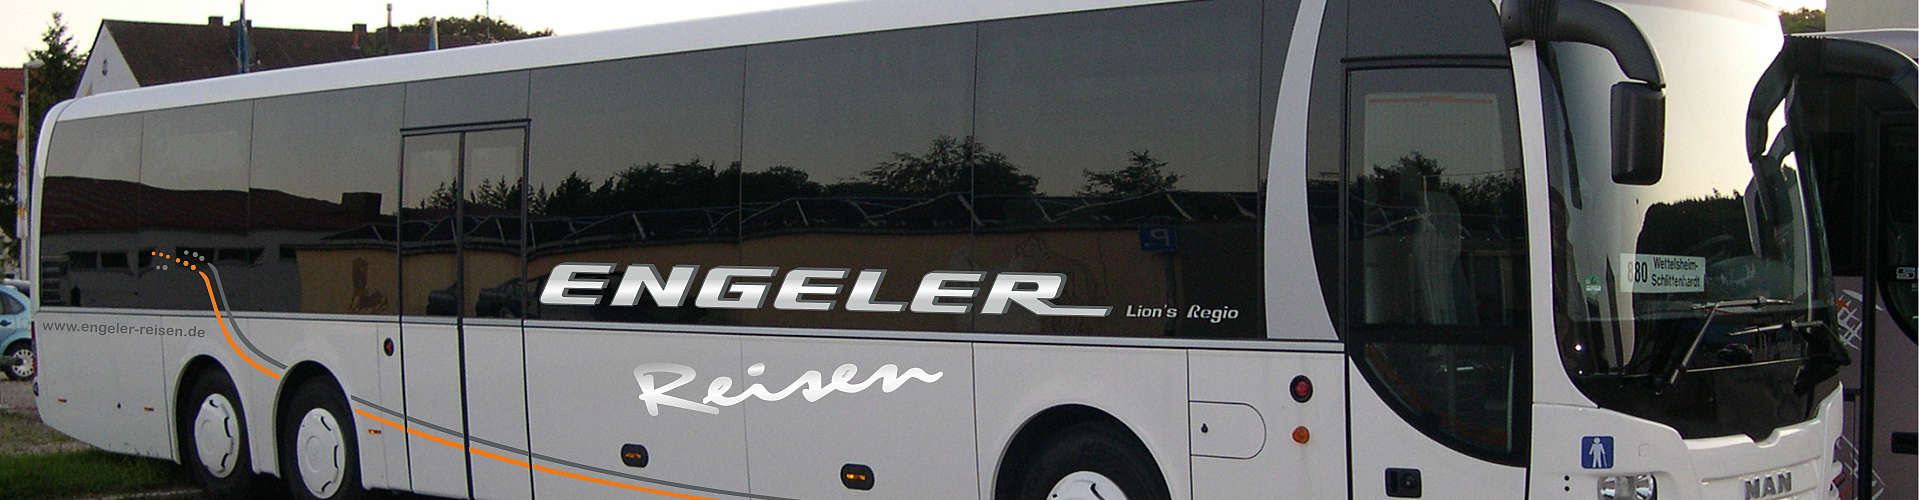 Fahrzeugdesign fuer Engeler Reisen, Treuchtlingen fuer comercial Werbedesign.